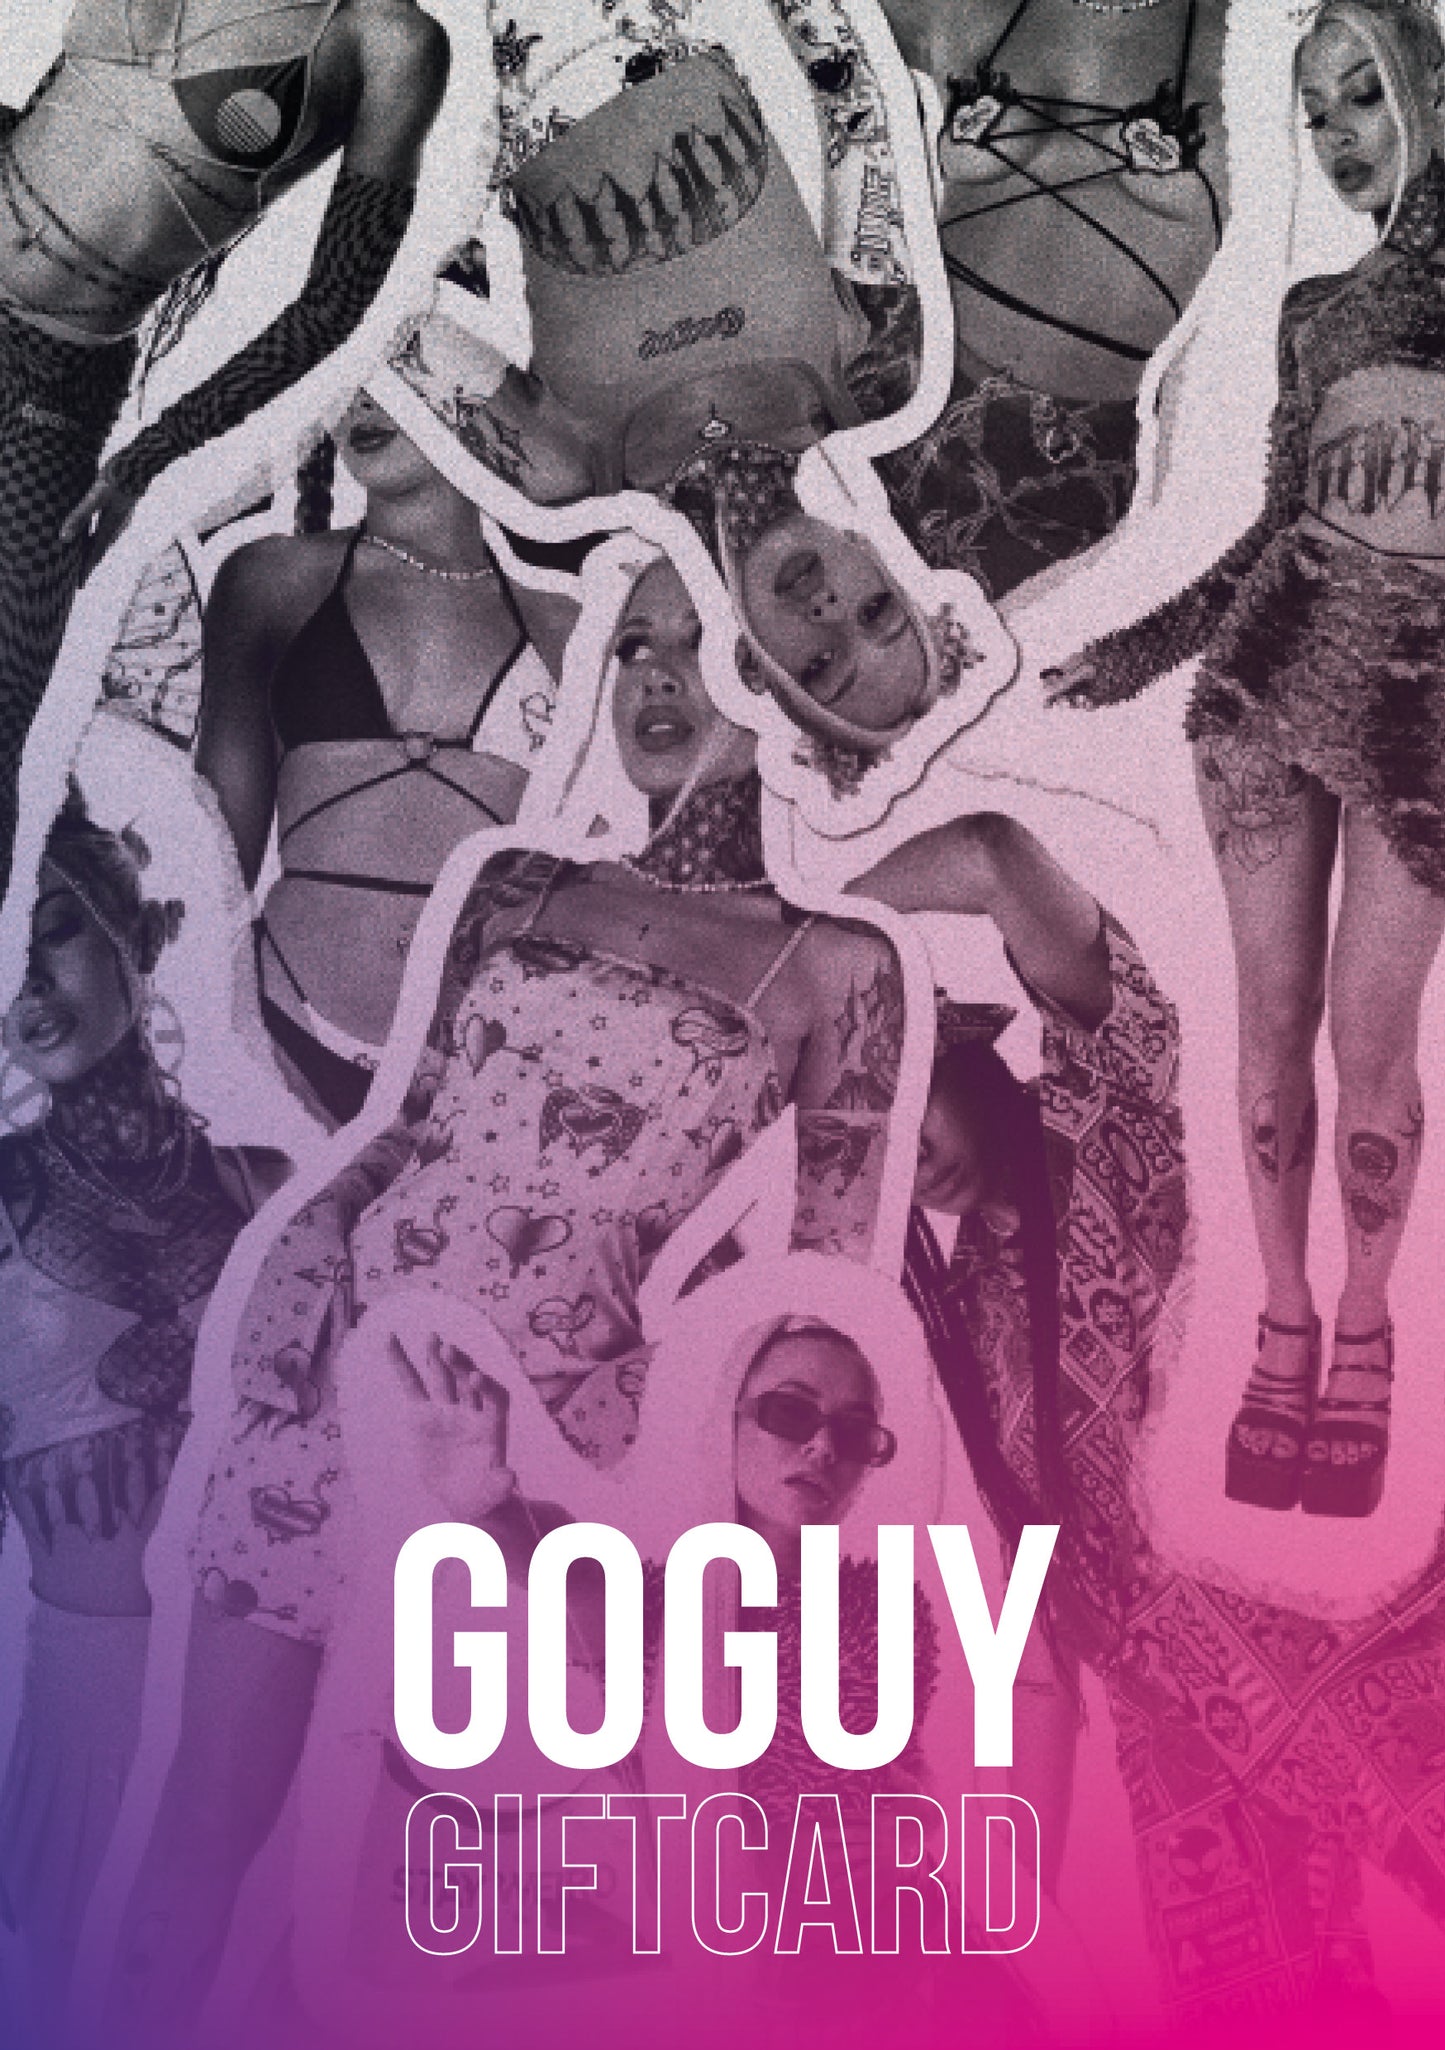 GOGUY E-GIFT CARD